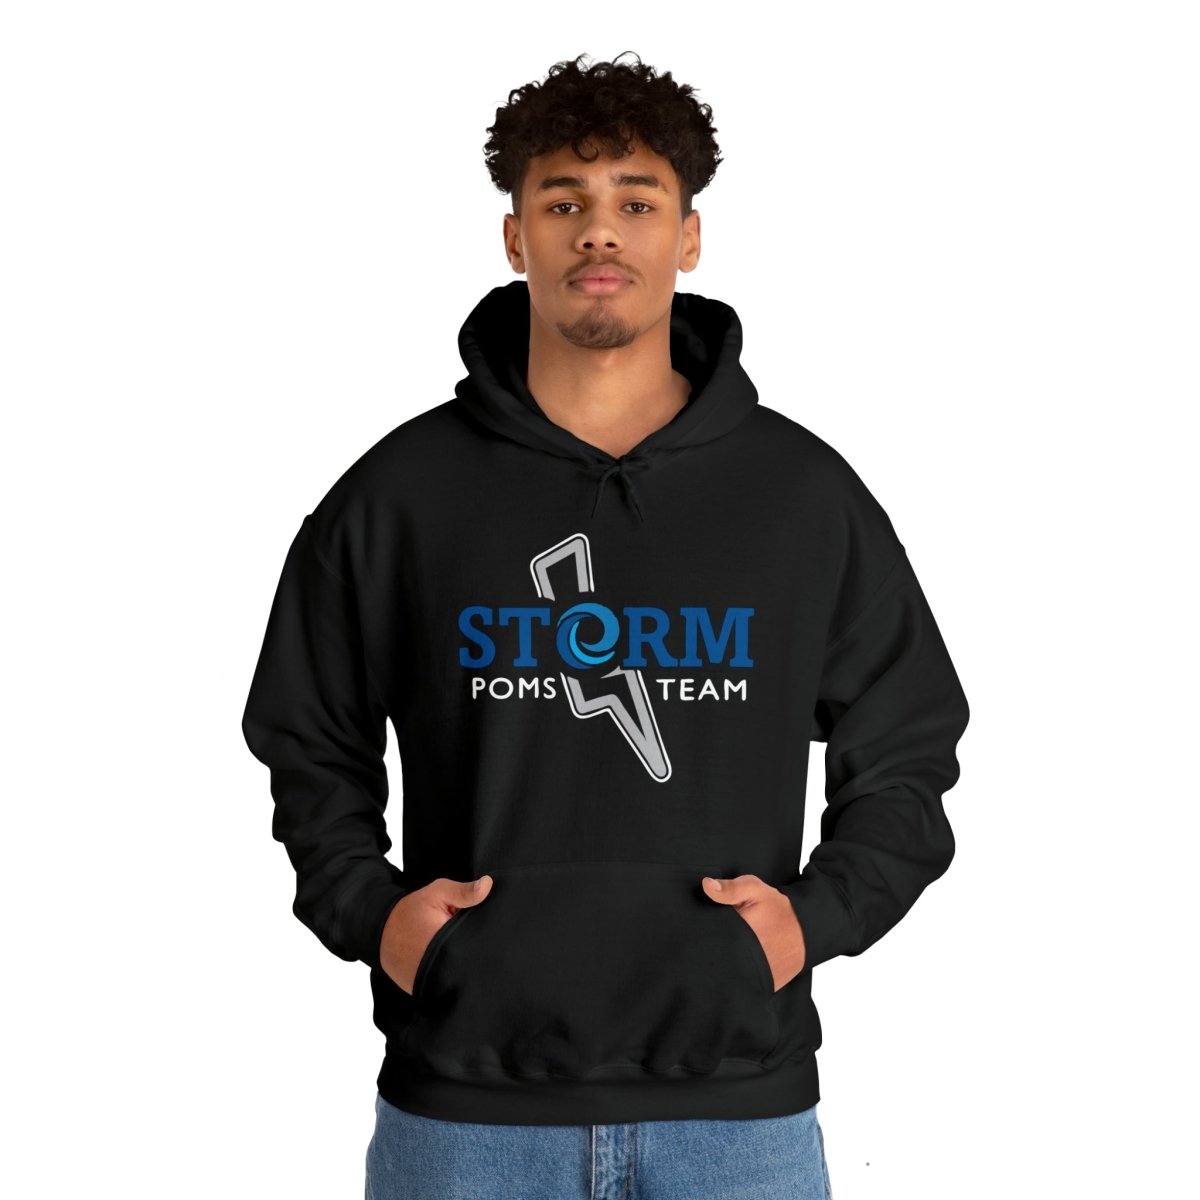 Storm Poms Team Hooded Sweatshirt